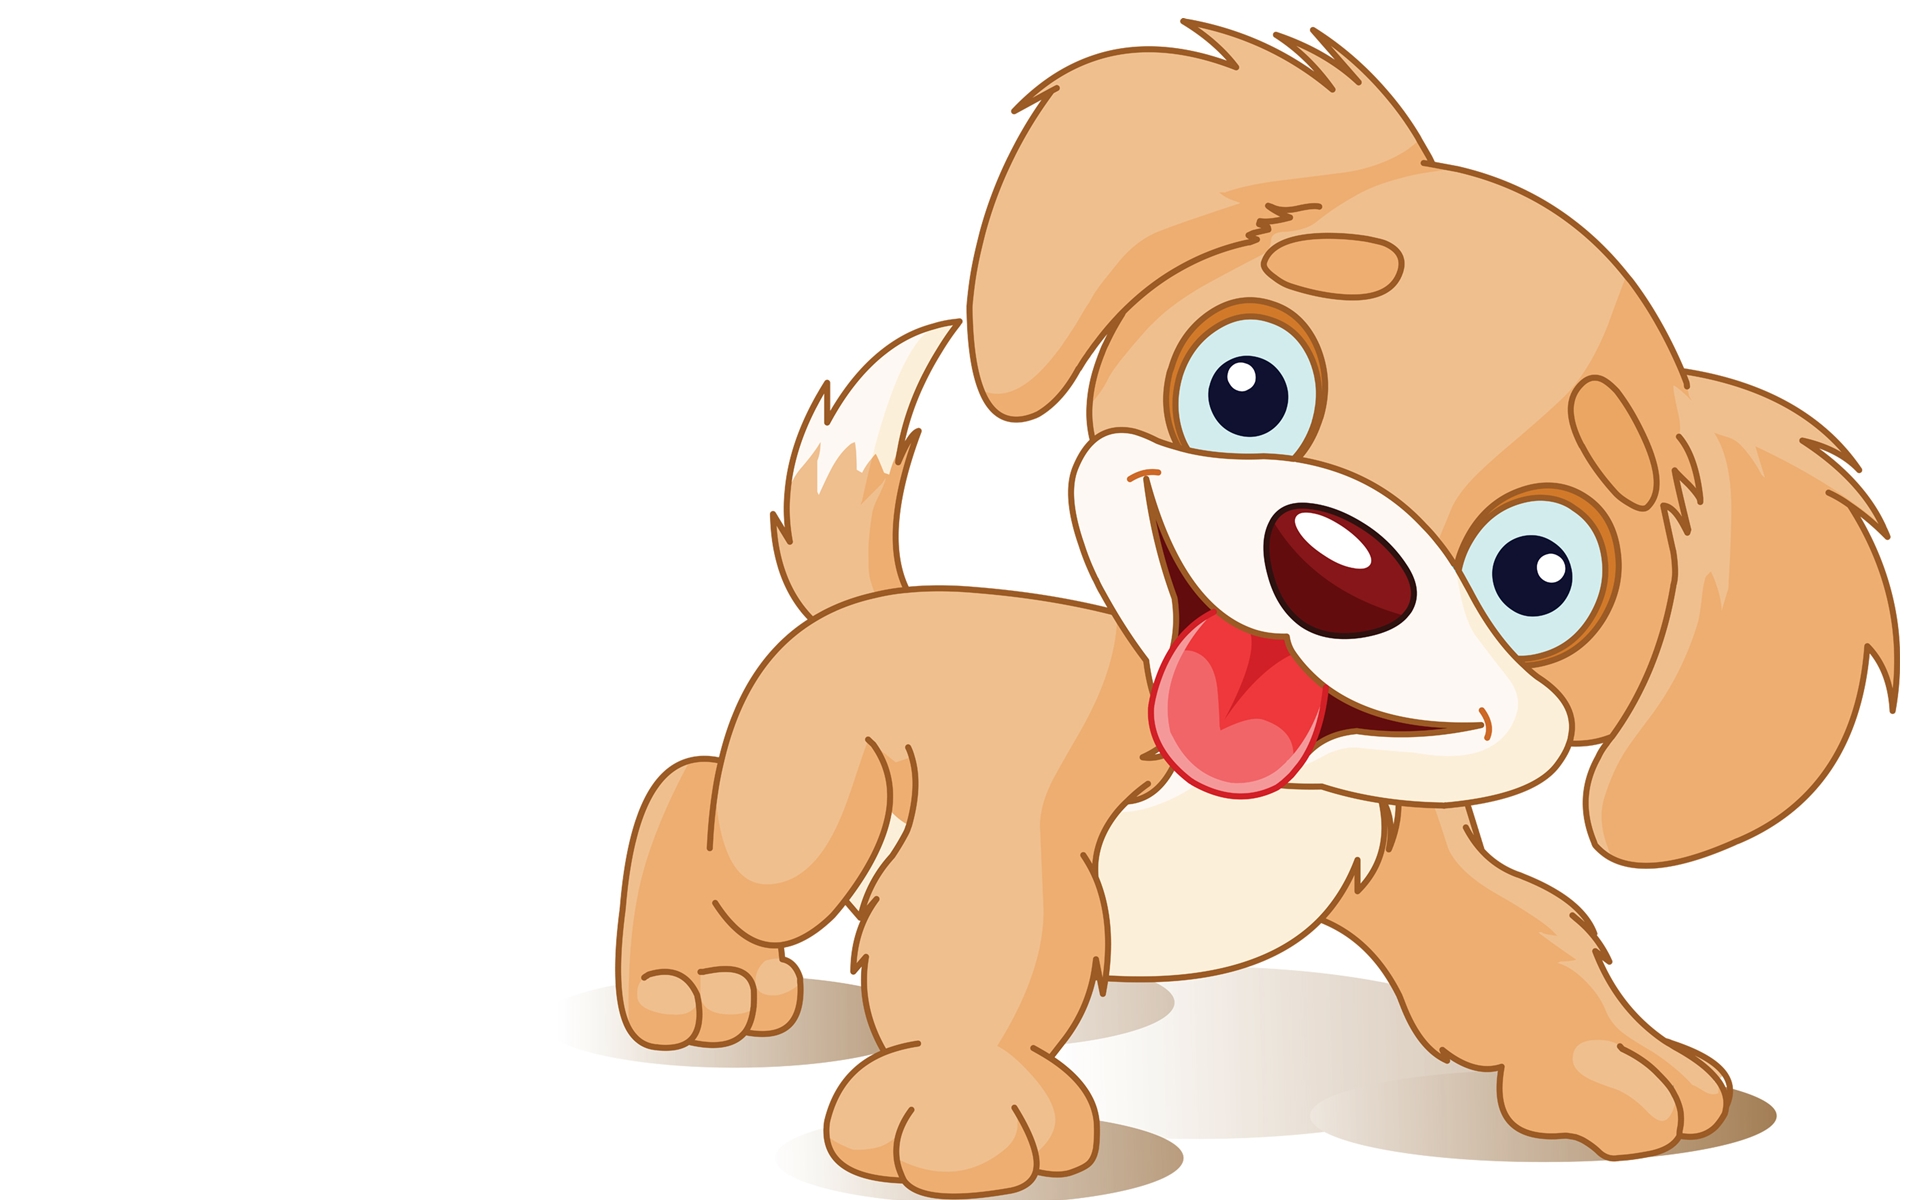 Cartoon Cute Dog Pictures : Free Image On Pixabay | Bodenewasurk